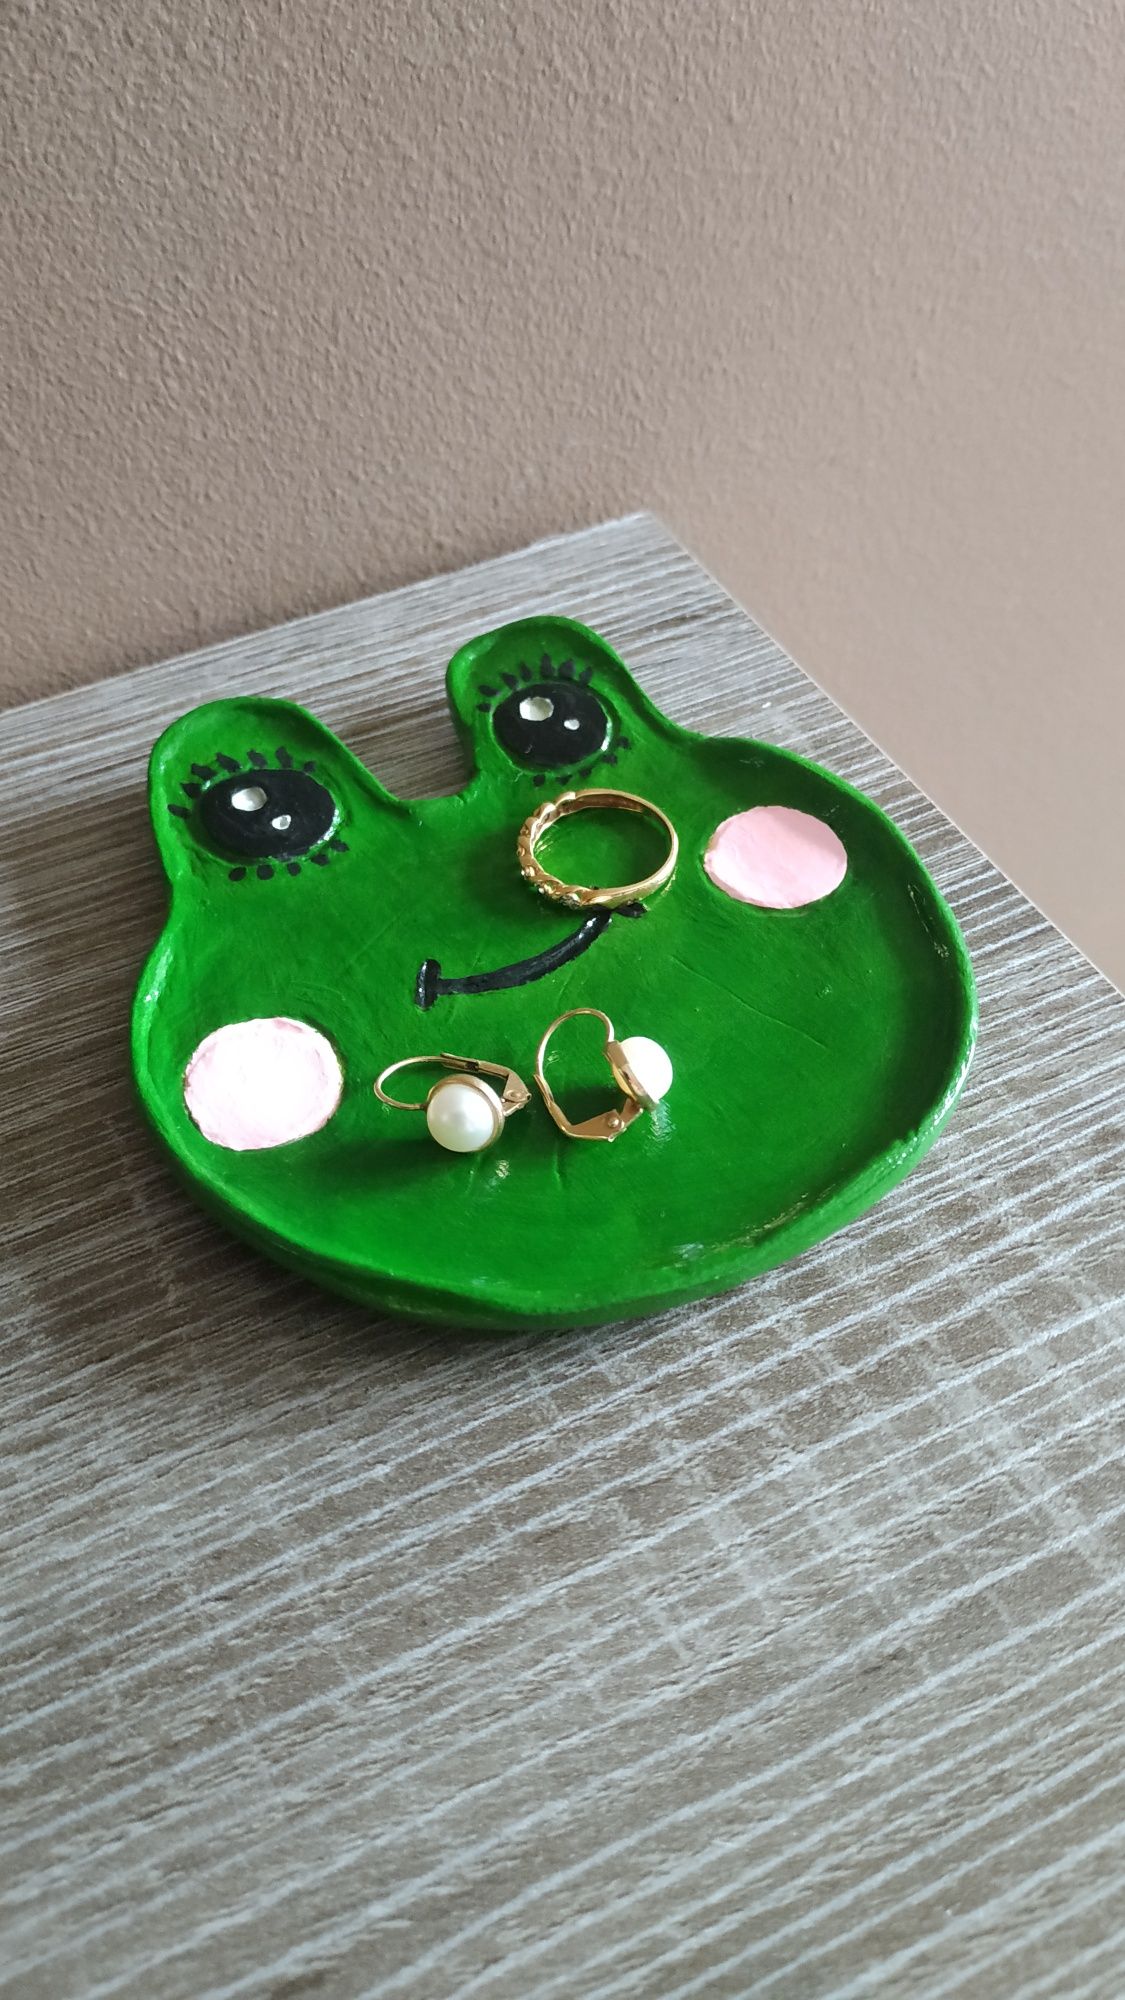 Taca dekoracyjna żabka podstawka na biżuterię Handmade